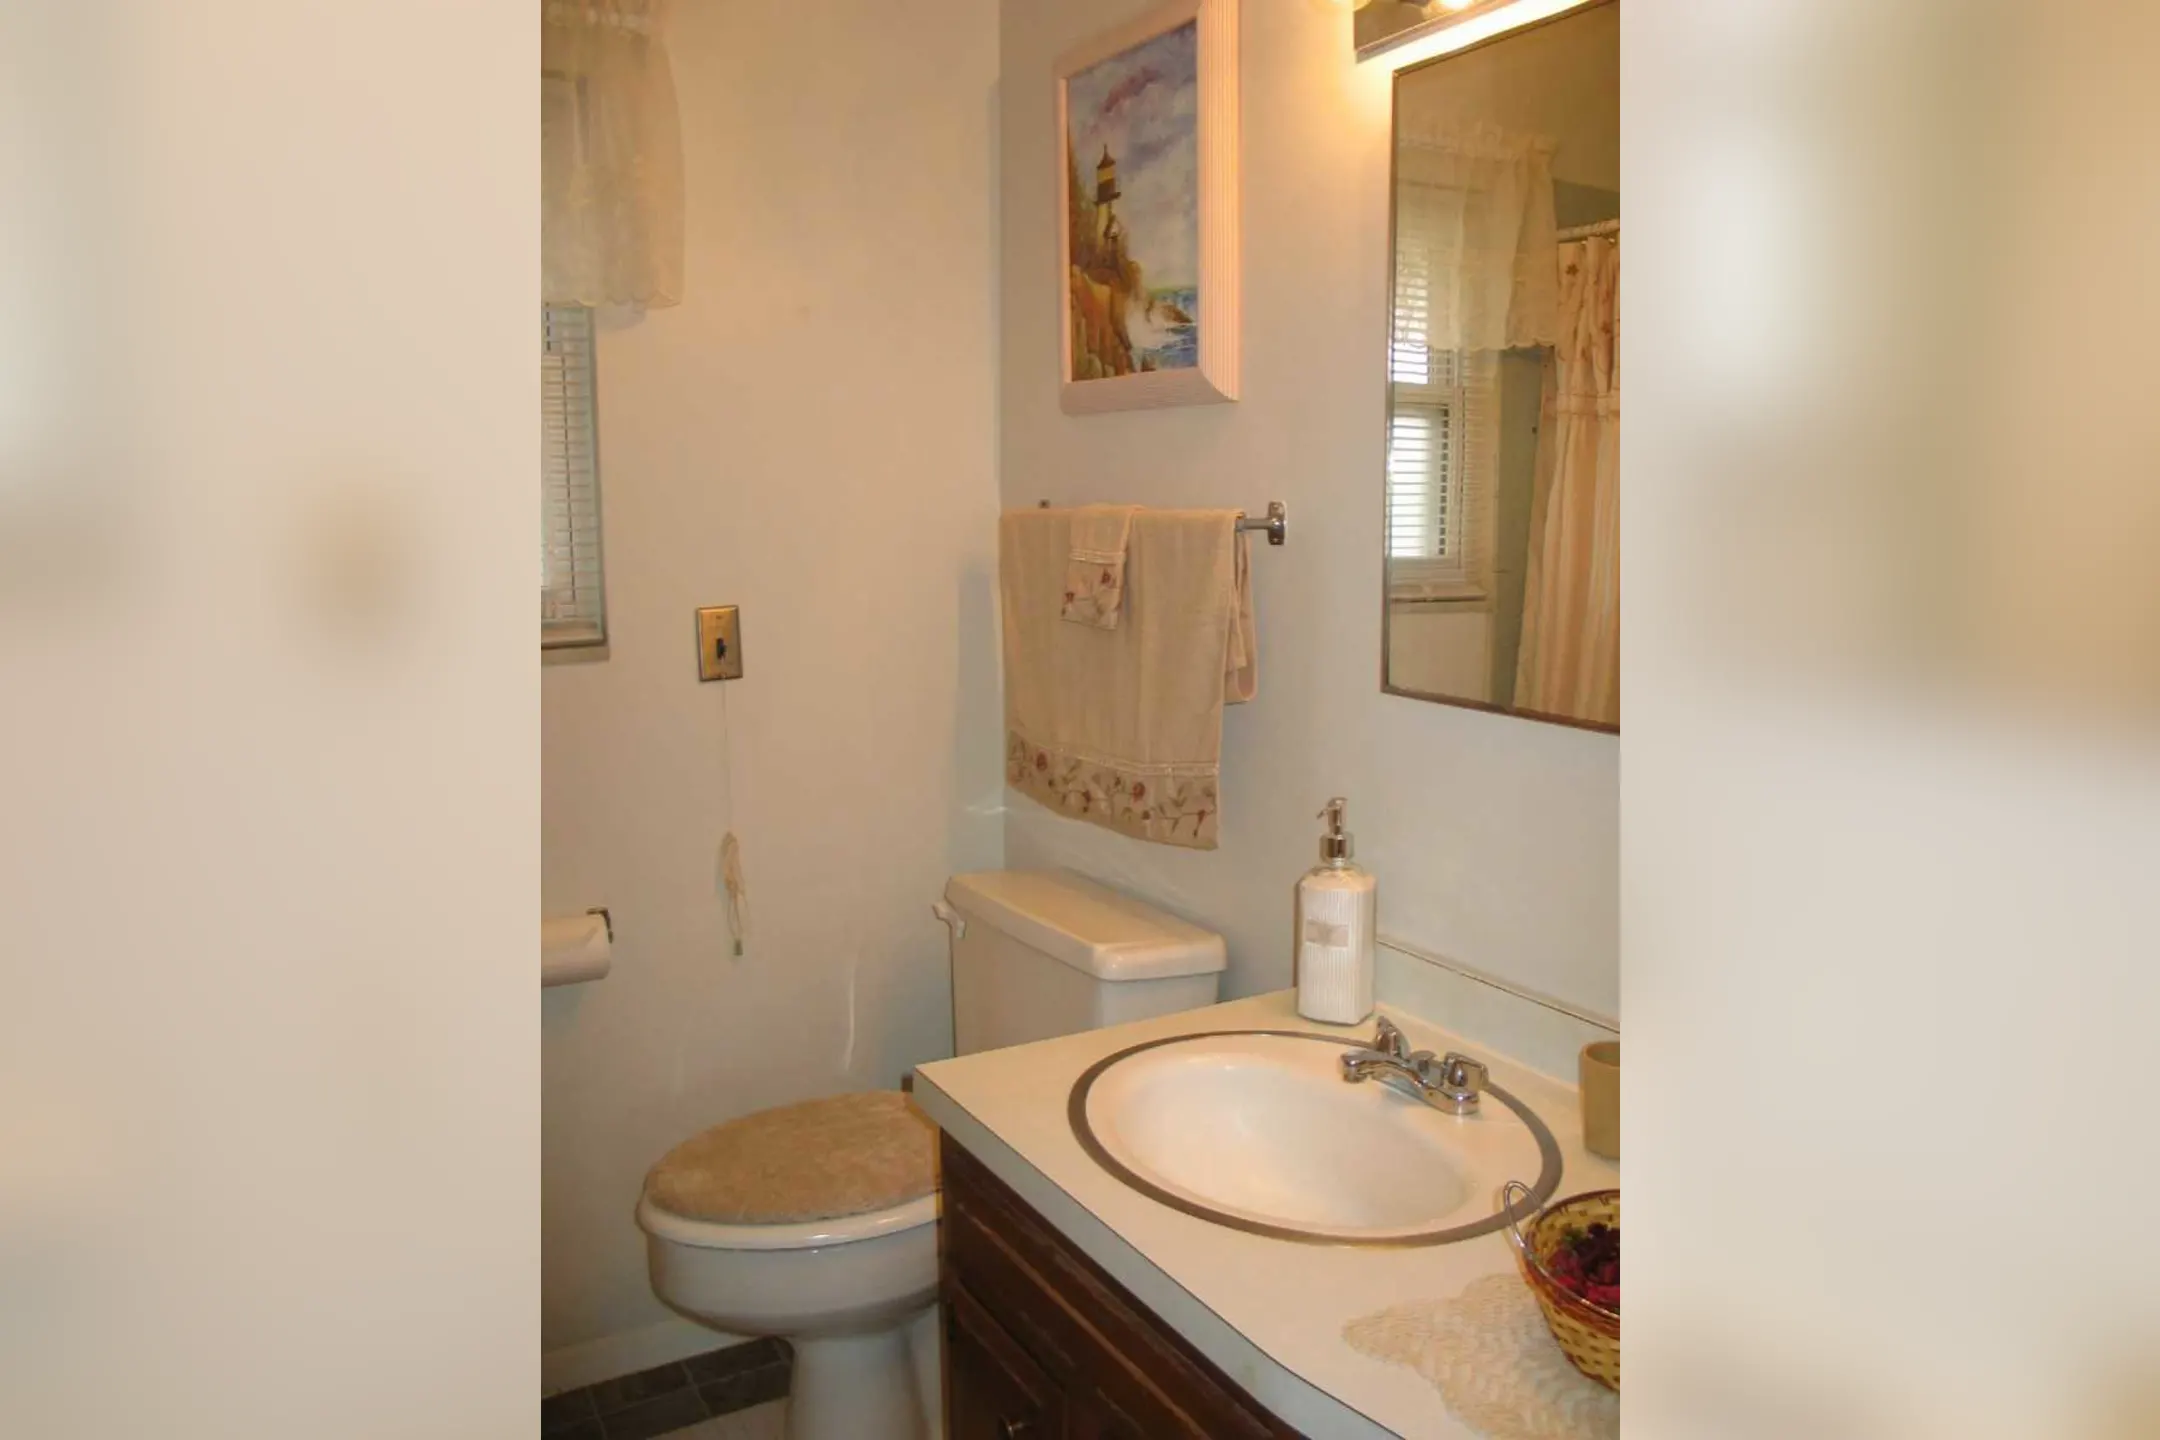 Bathroom - Horizon Homes Retirement Community - Evansville, IN